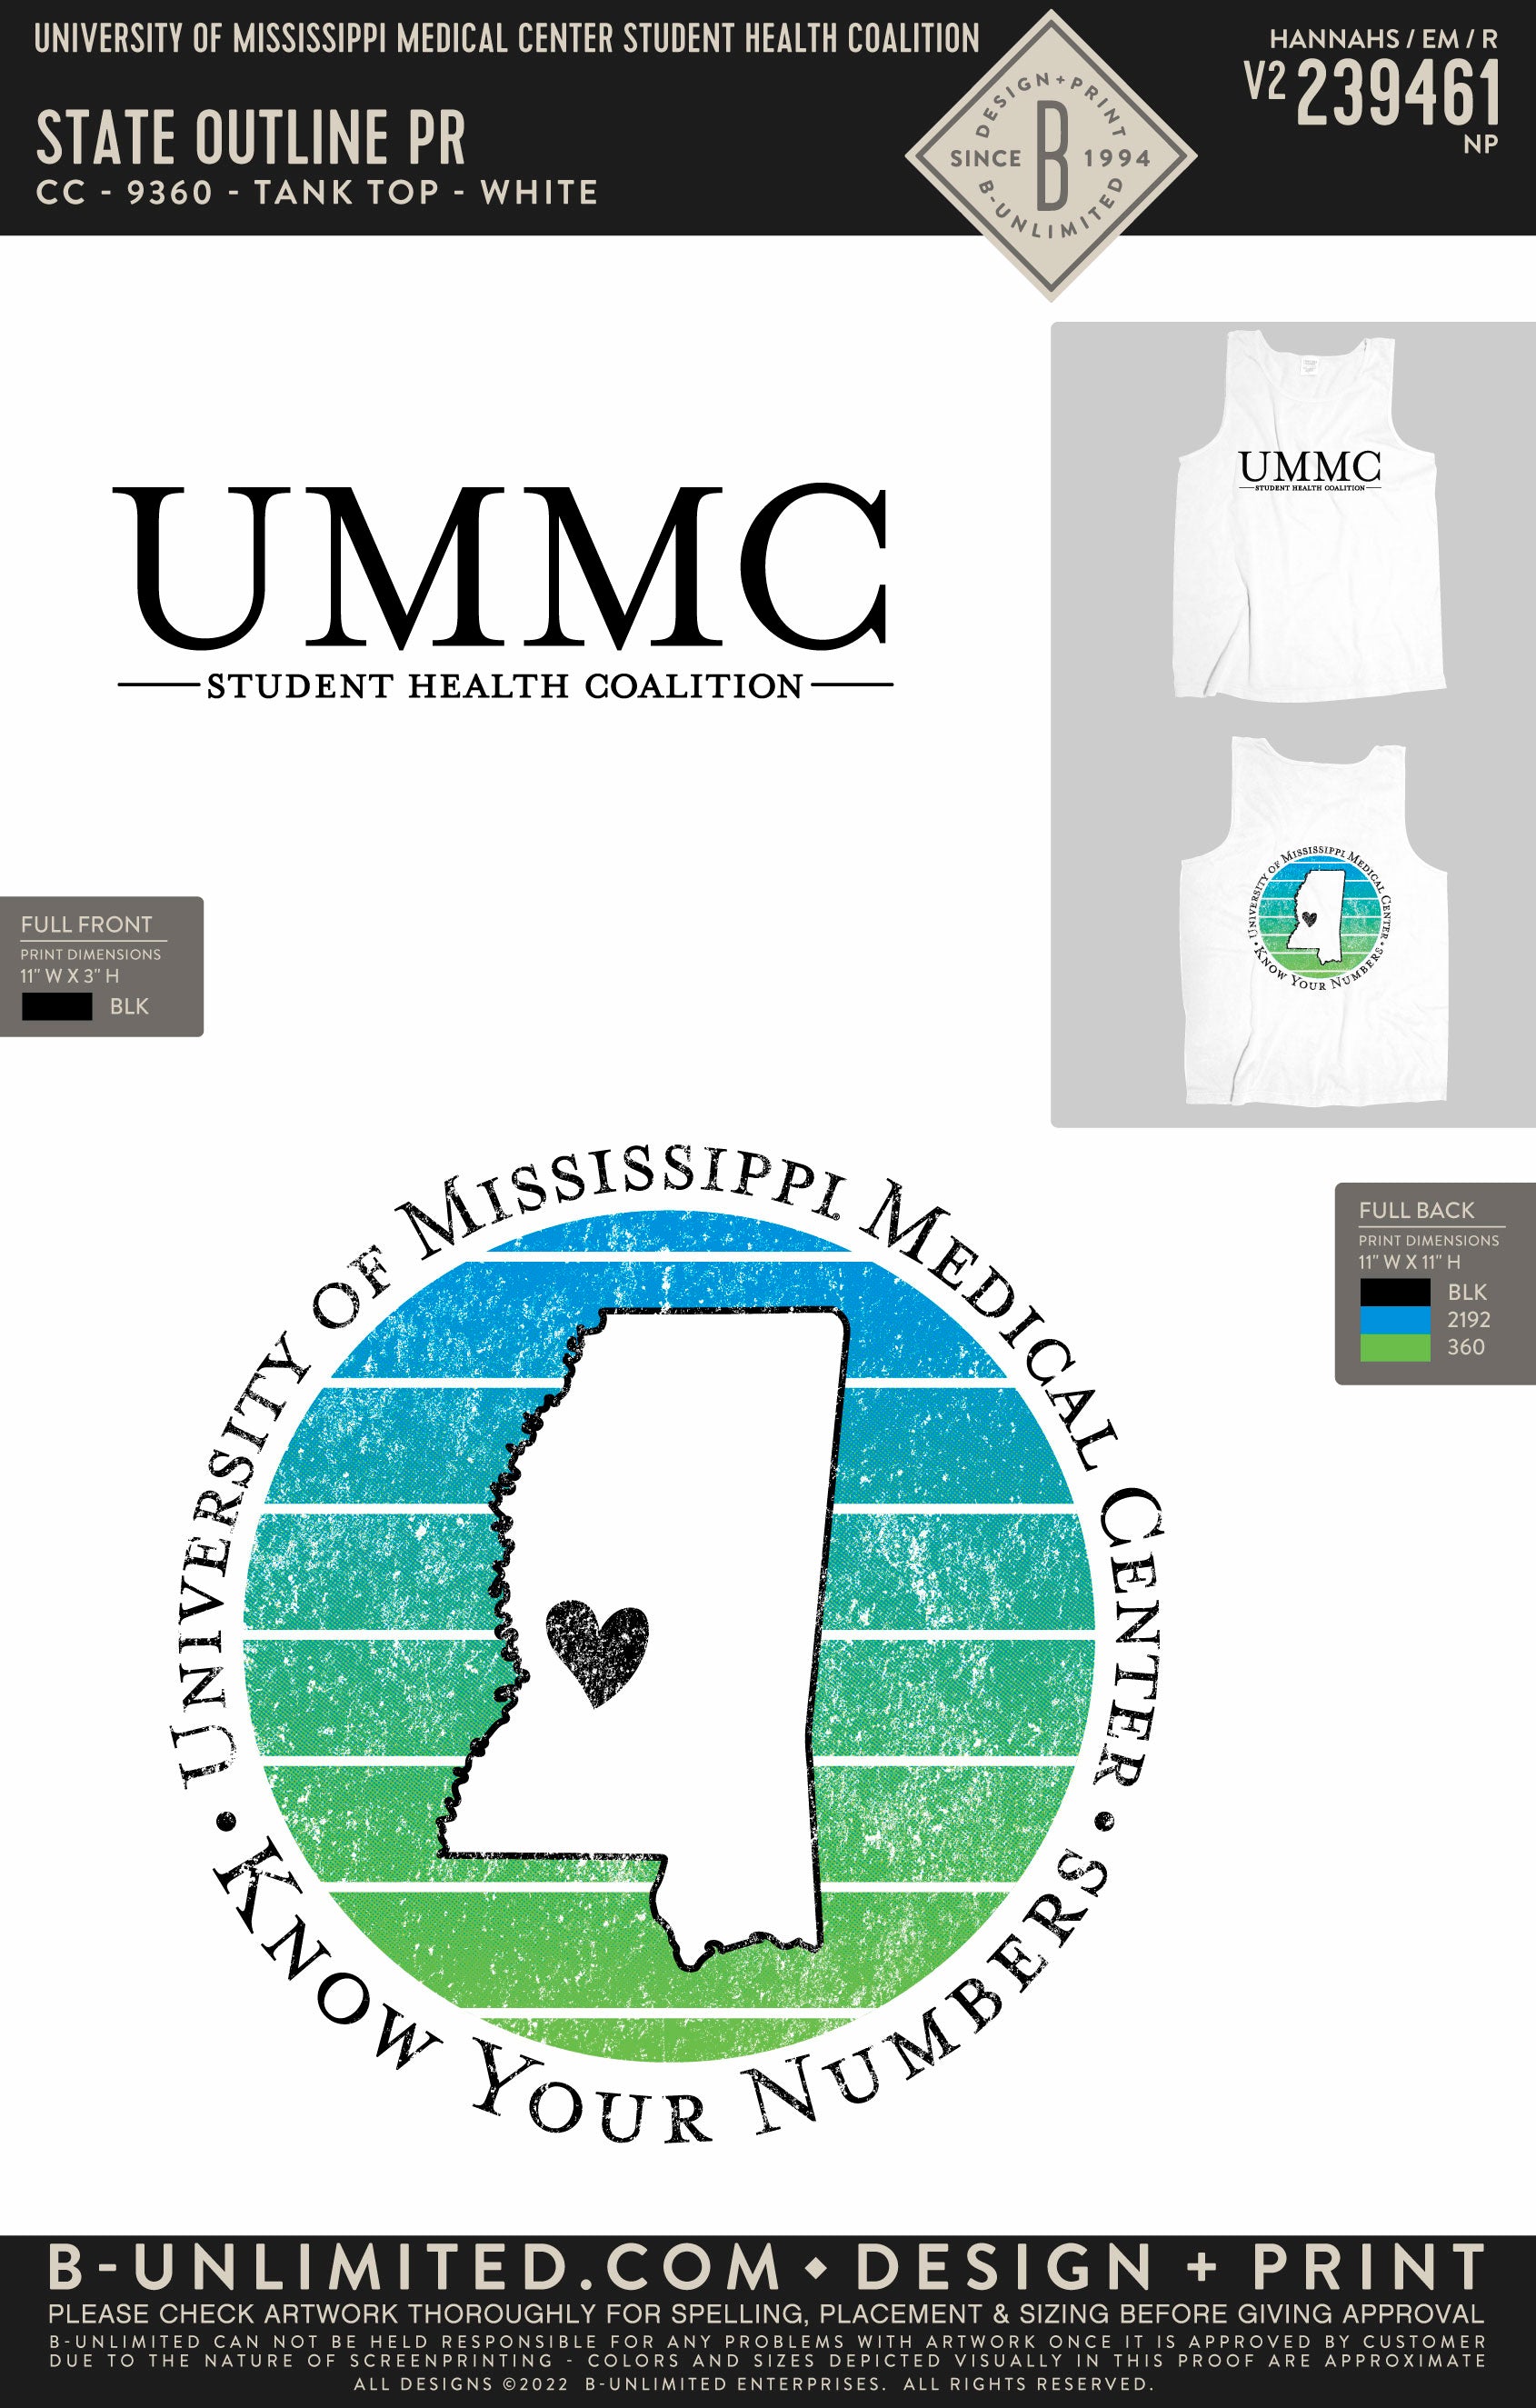 University of Mississippi Medical Center Student Health Coalition - State Outline PR - CC - 9360 - Tank Top - White